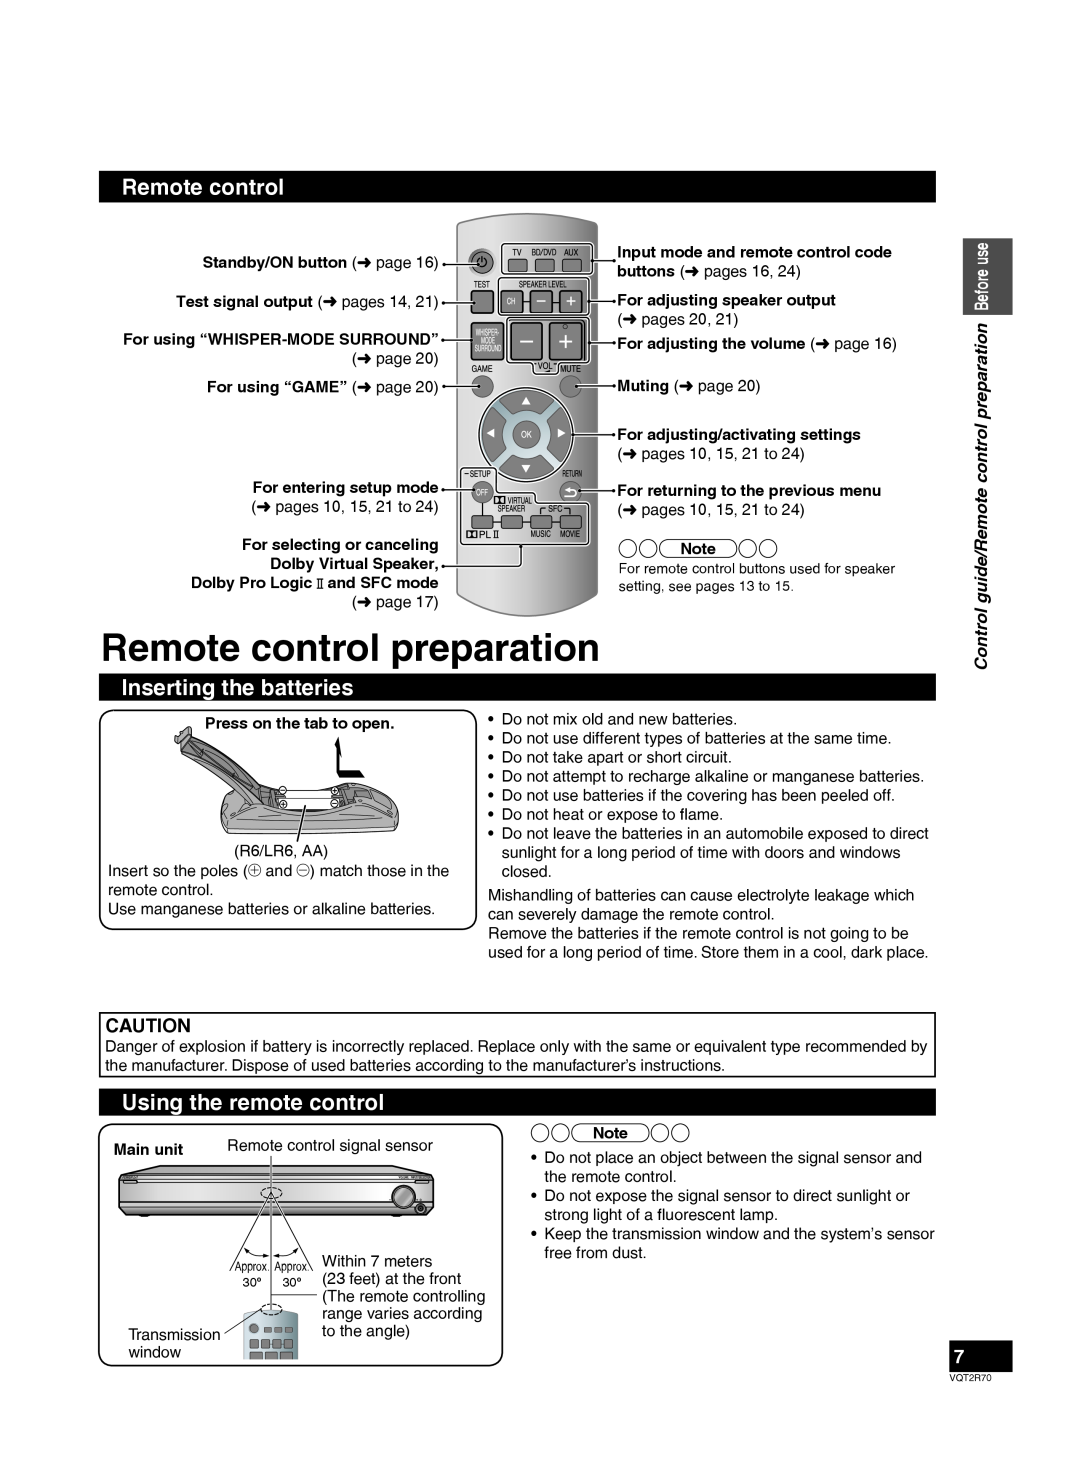 Panasonic SC-ZT2 warranty Remote control preparation, Inserting the batteries, Using the remote control, Control 